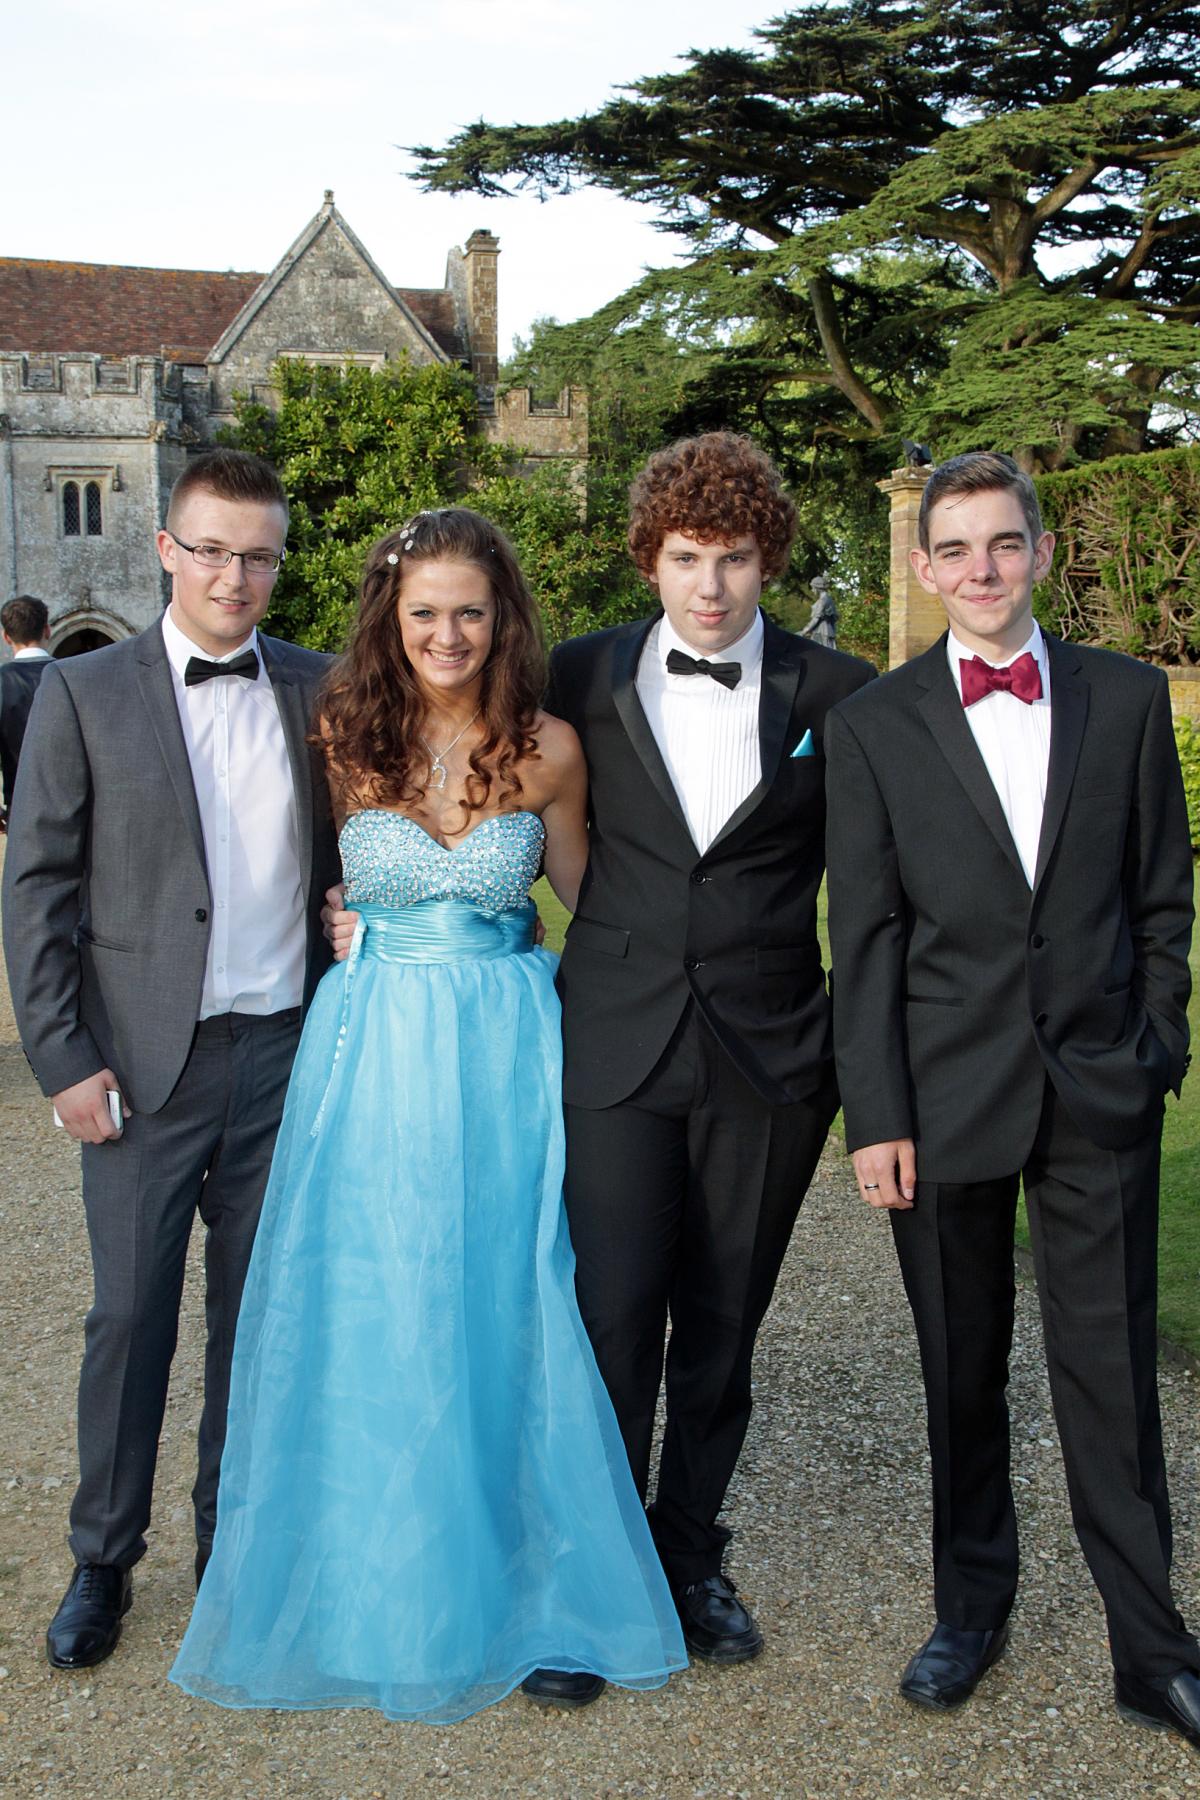 Lytchett Minster School Year 11 prom at Athelhampton House